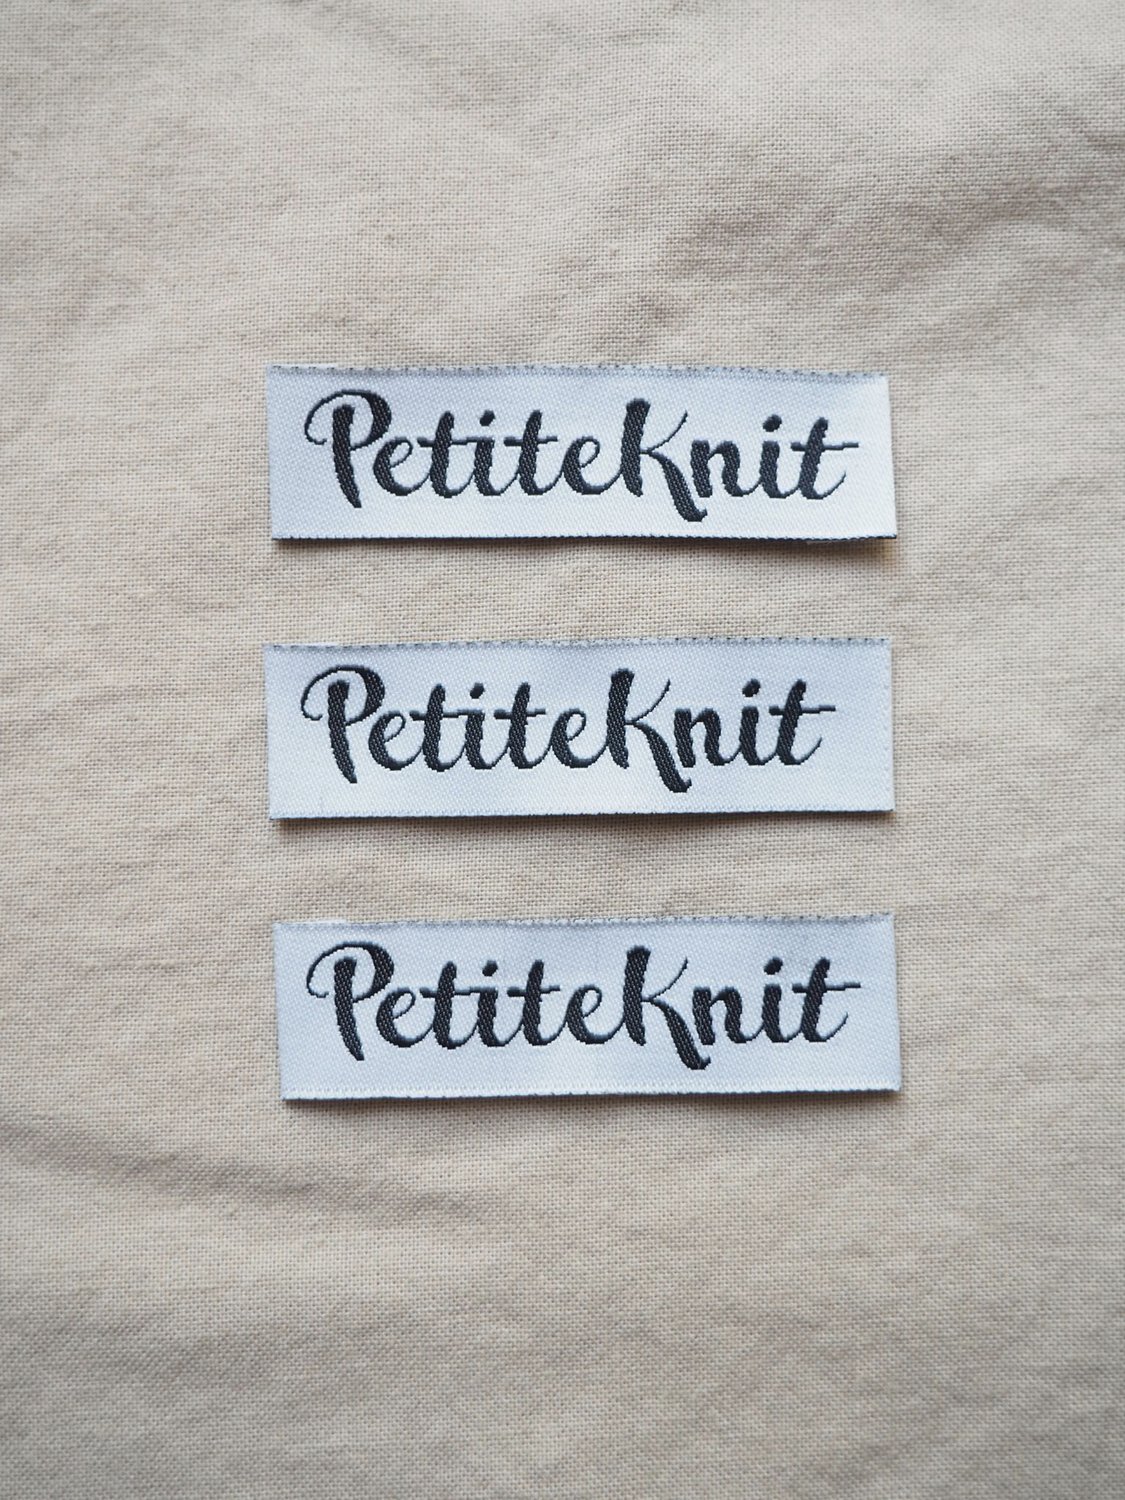 Label "PetiteKnit"